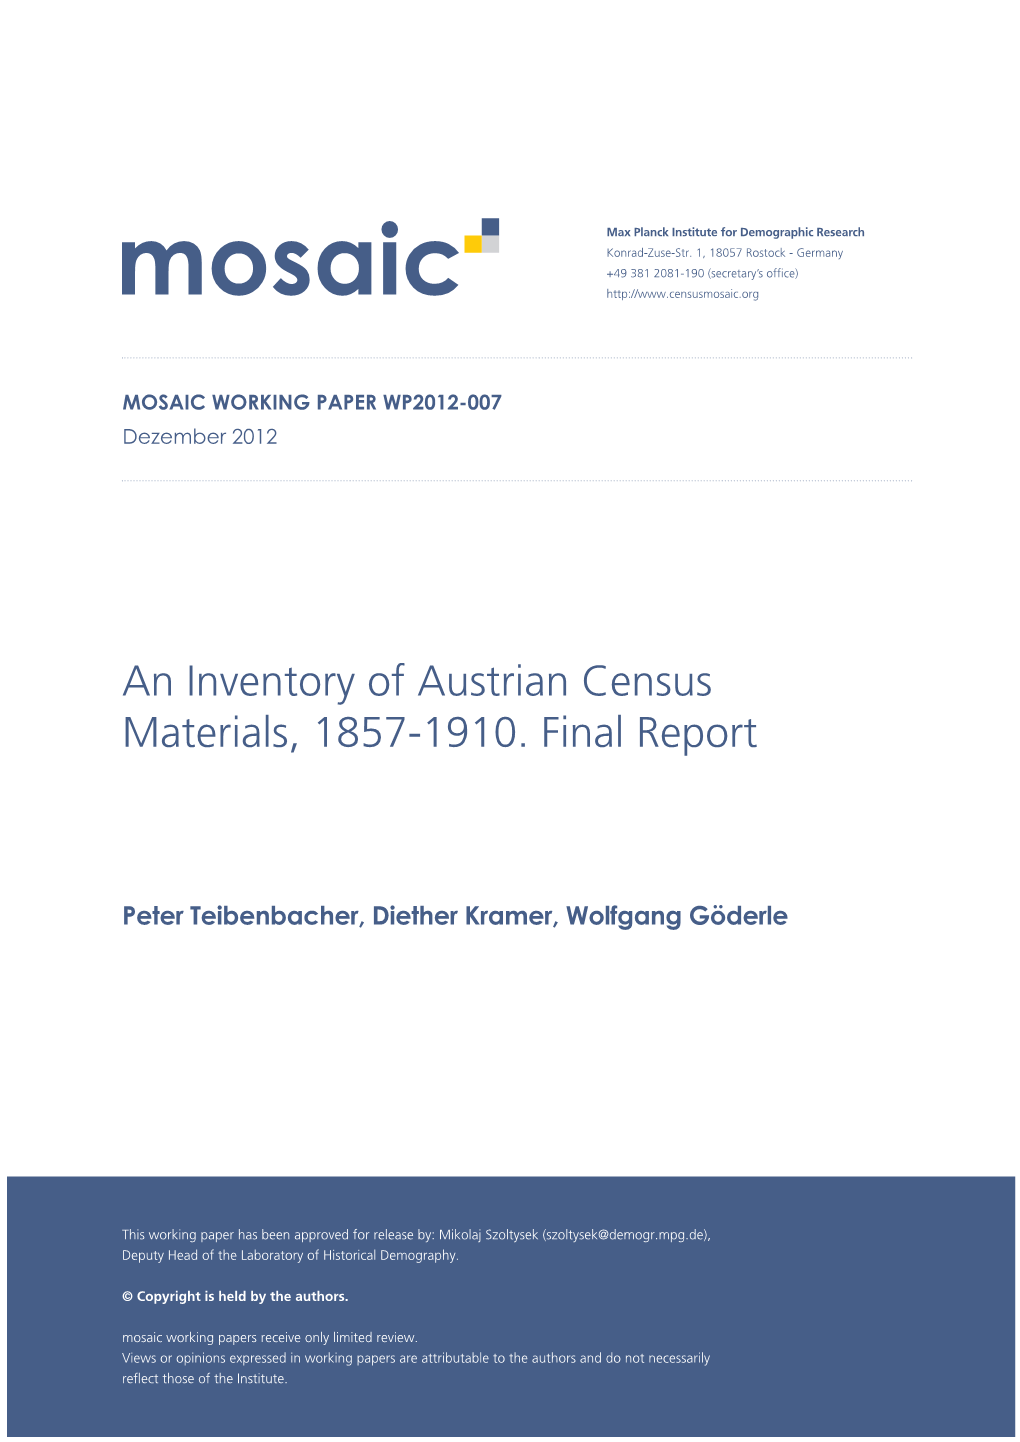 An Inventory of Austrian Census Materials, 1857-1910. Final Report